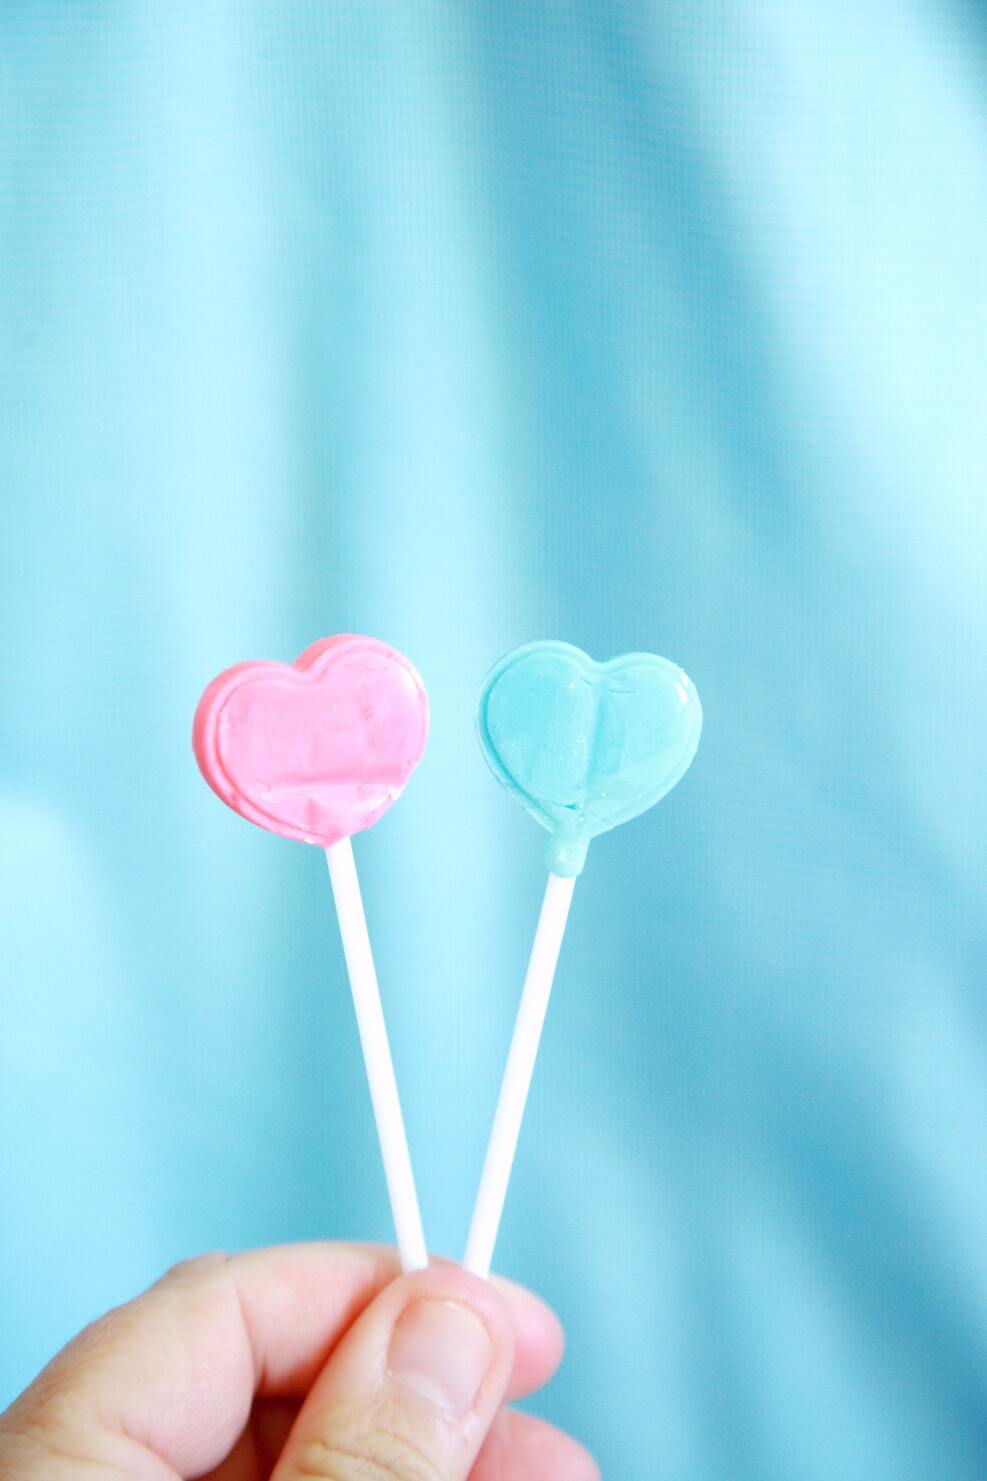 replicated lollipops